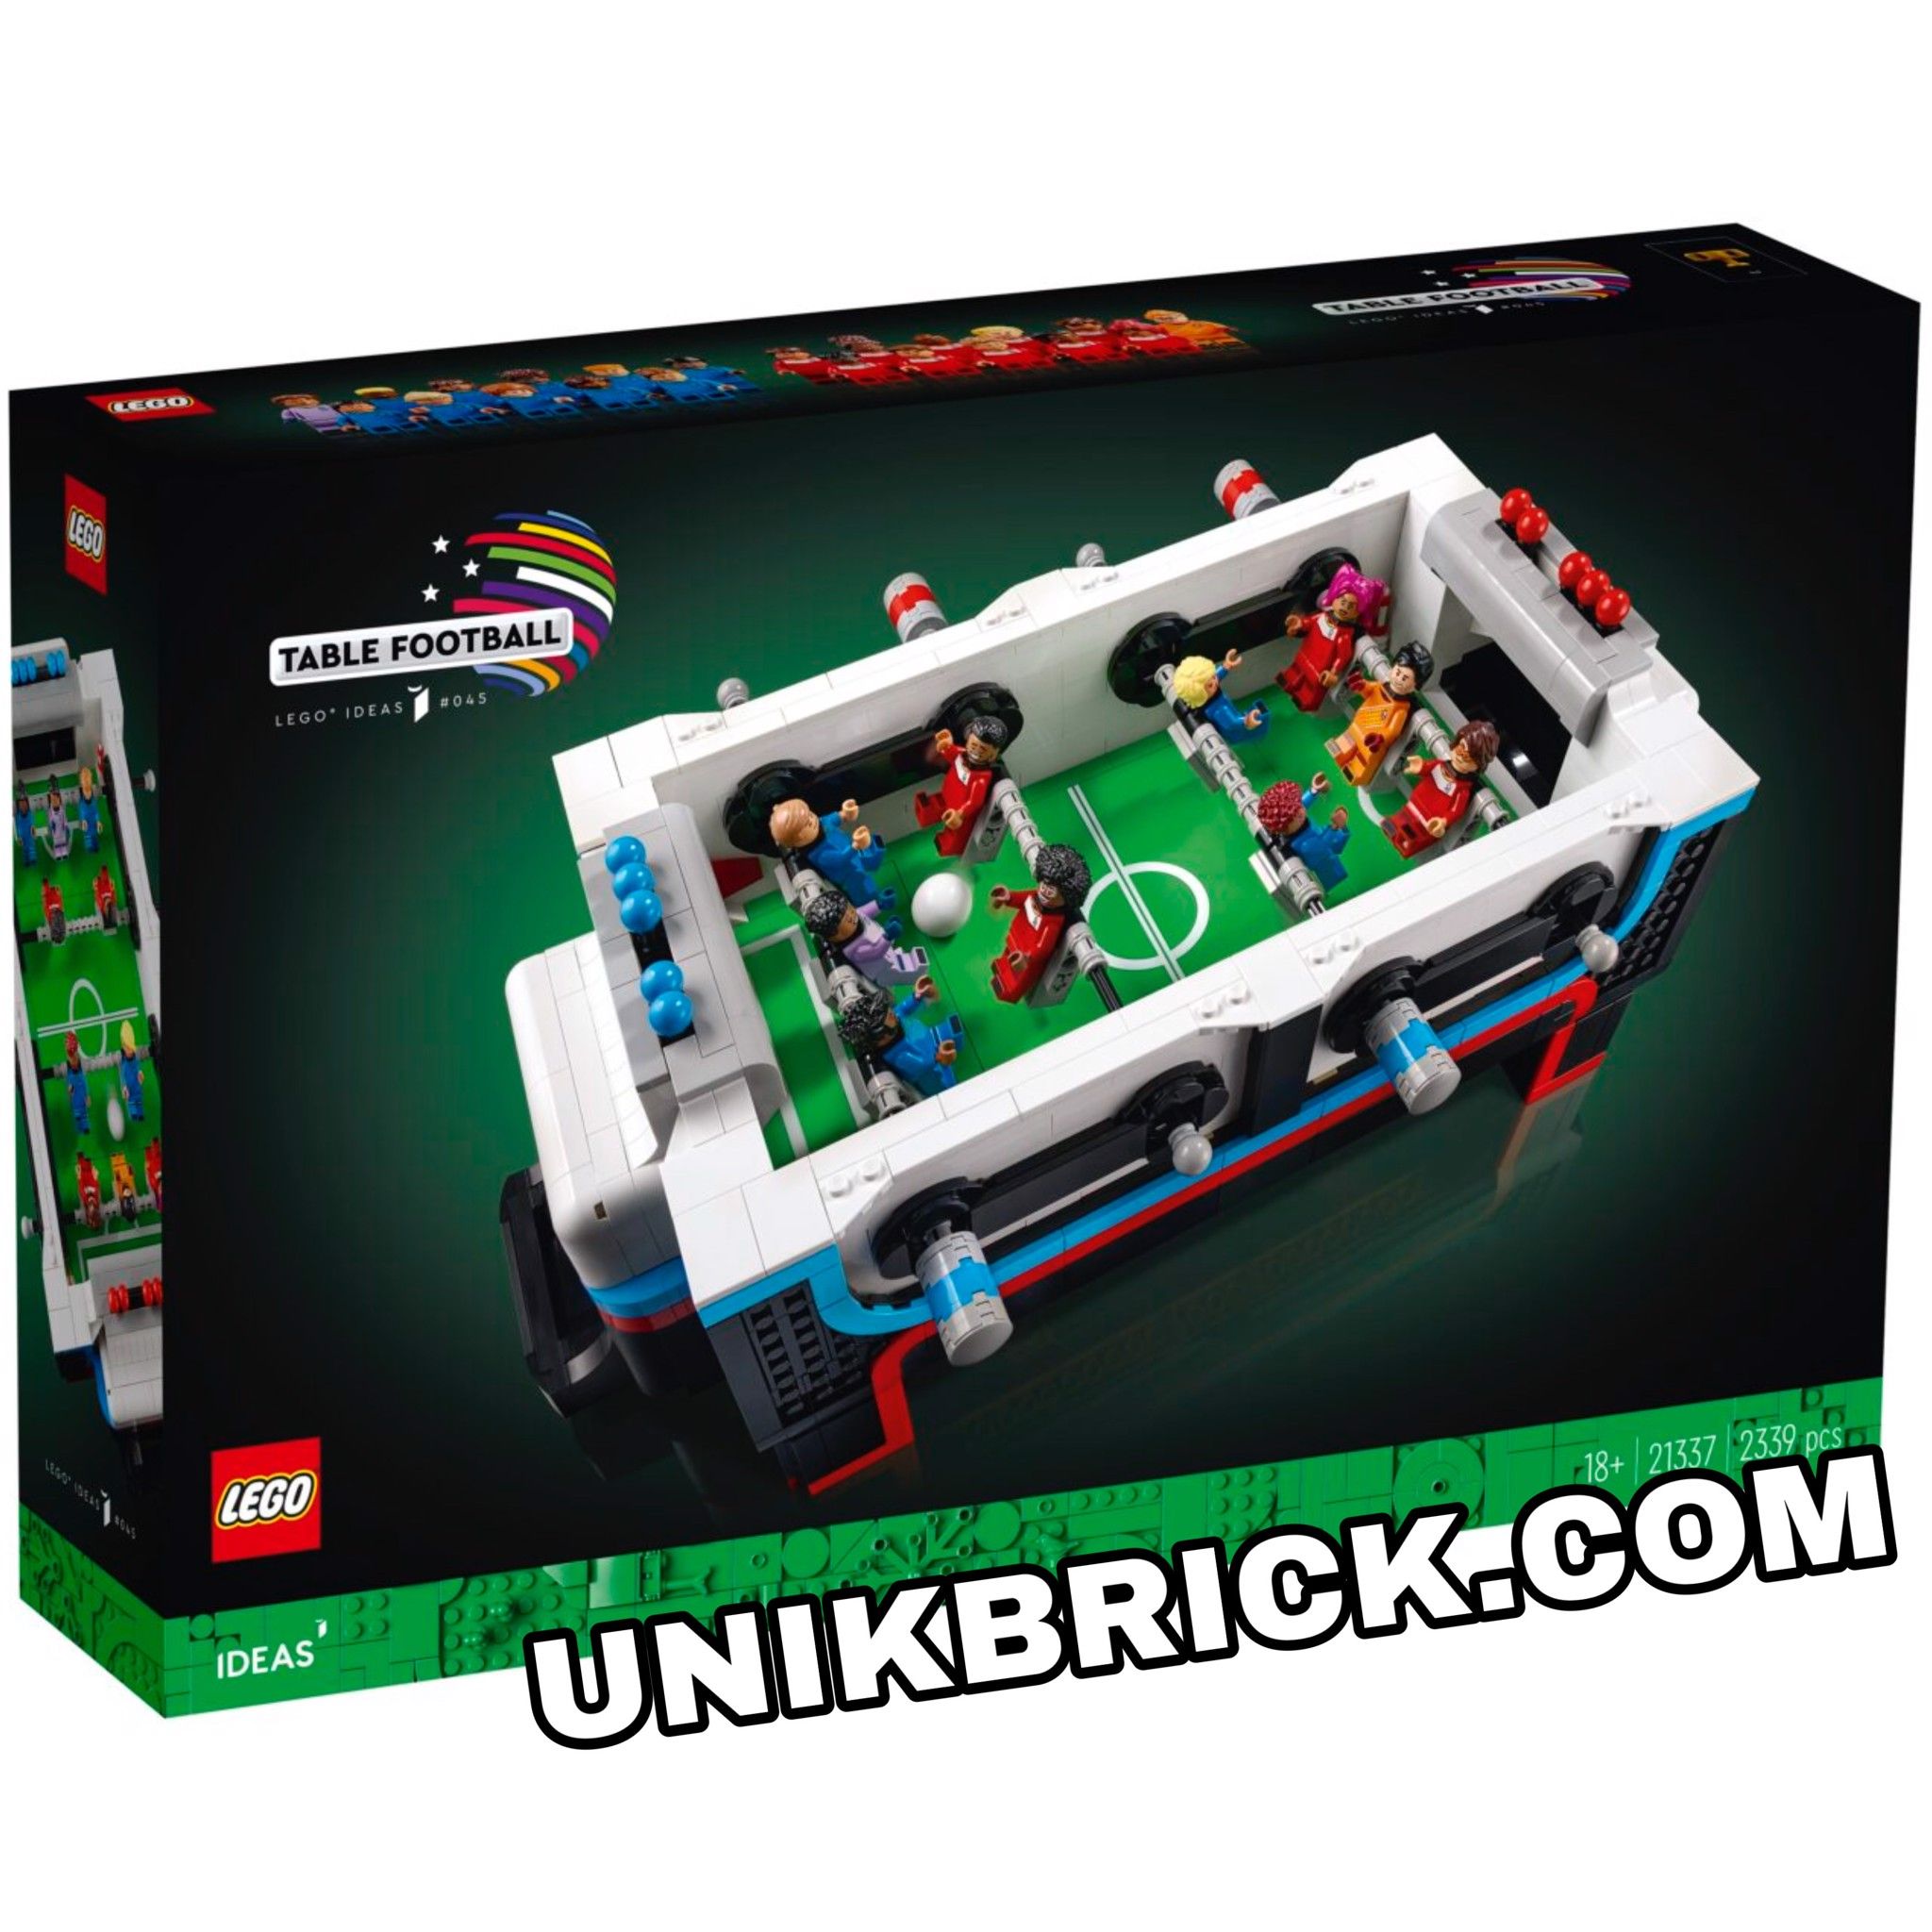 [HÀNG ĐẶT/ ORDER] LEGO Ideas 21337 Table Football